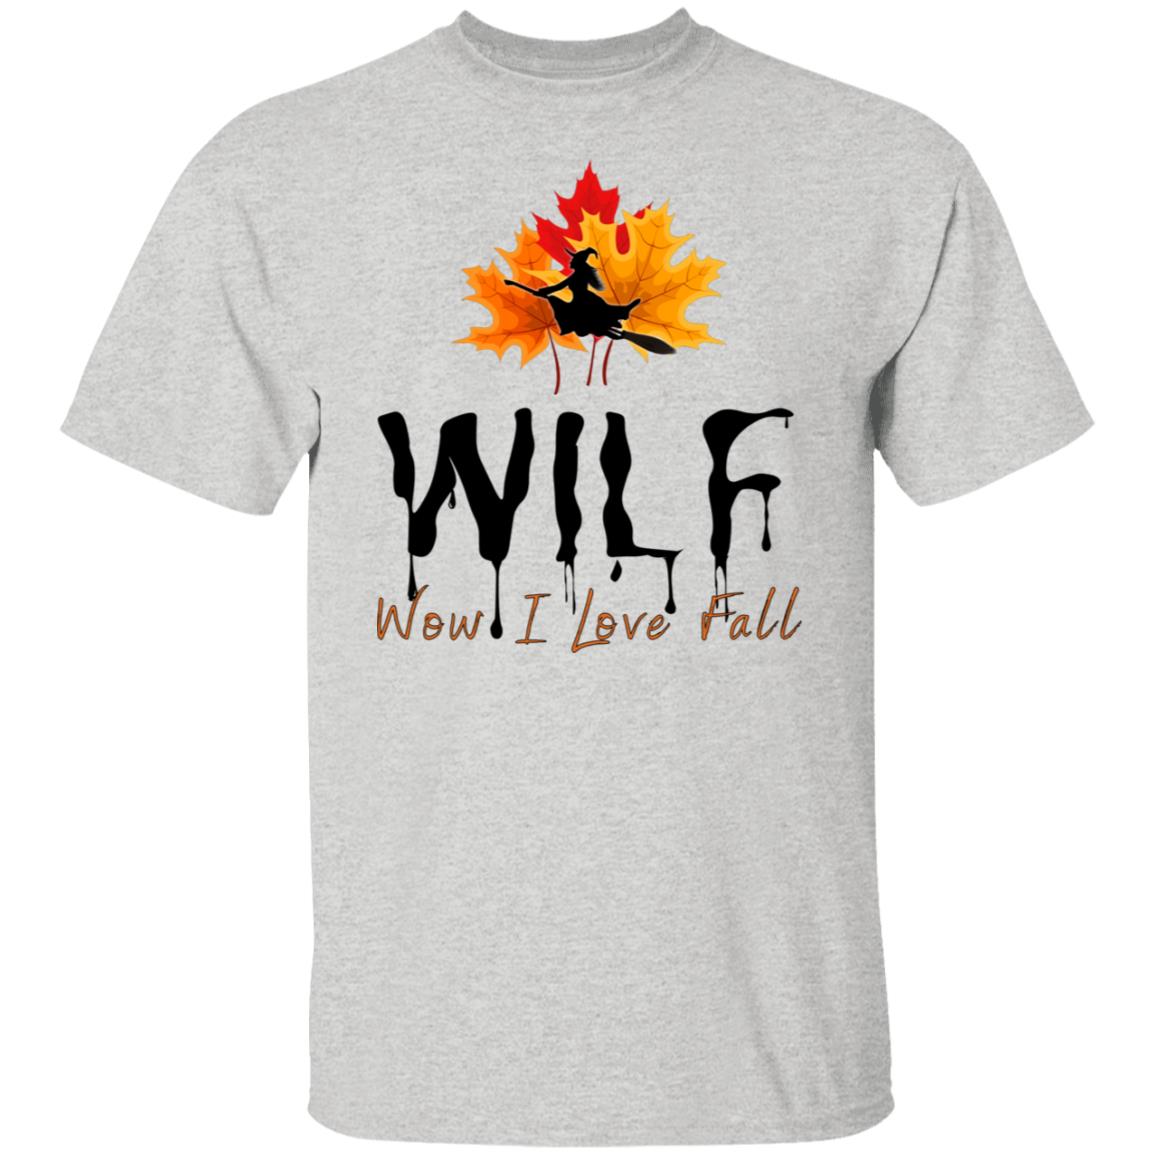 Copy of Wow I love Fall WILF T Shirt WILF Wow I Love Fall T-Shirt